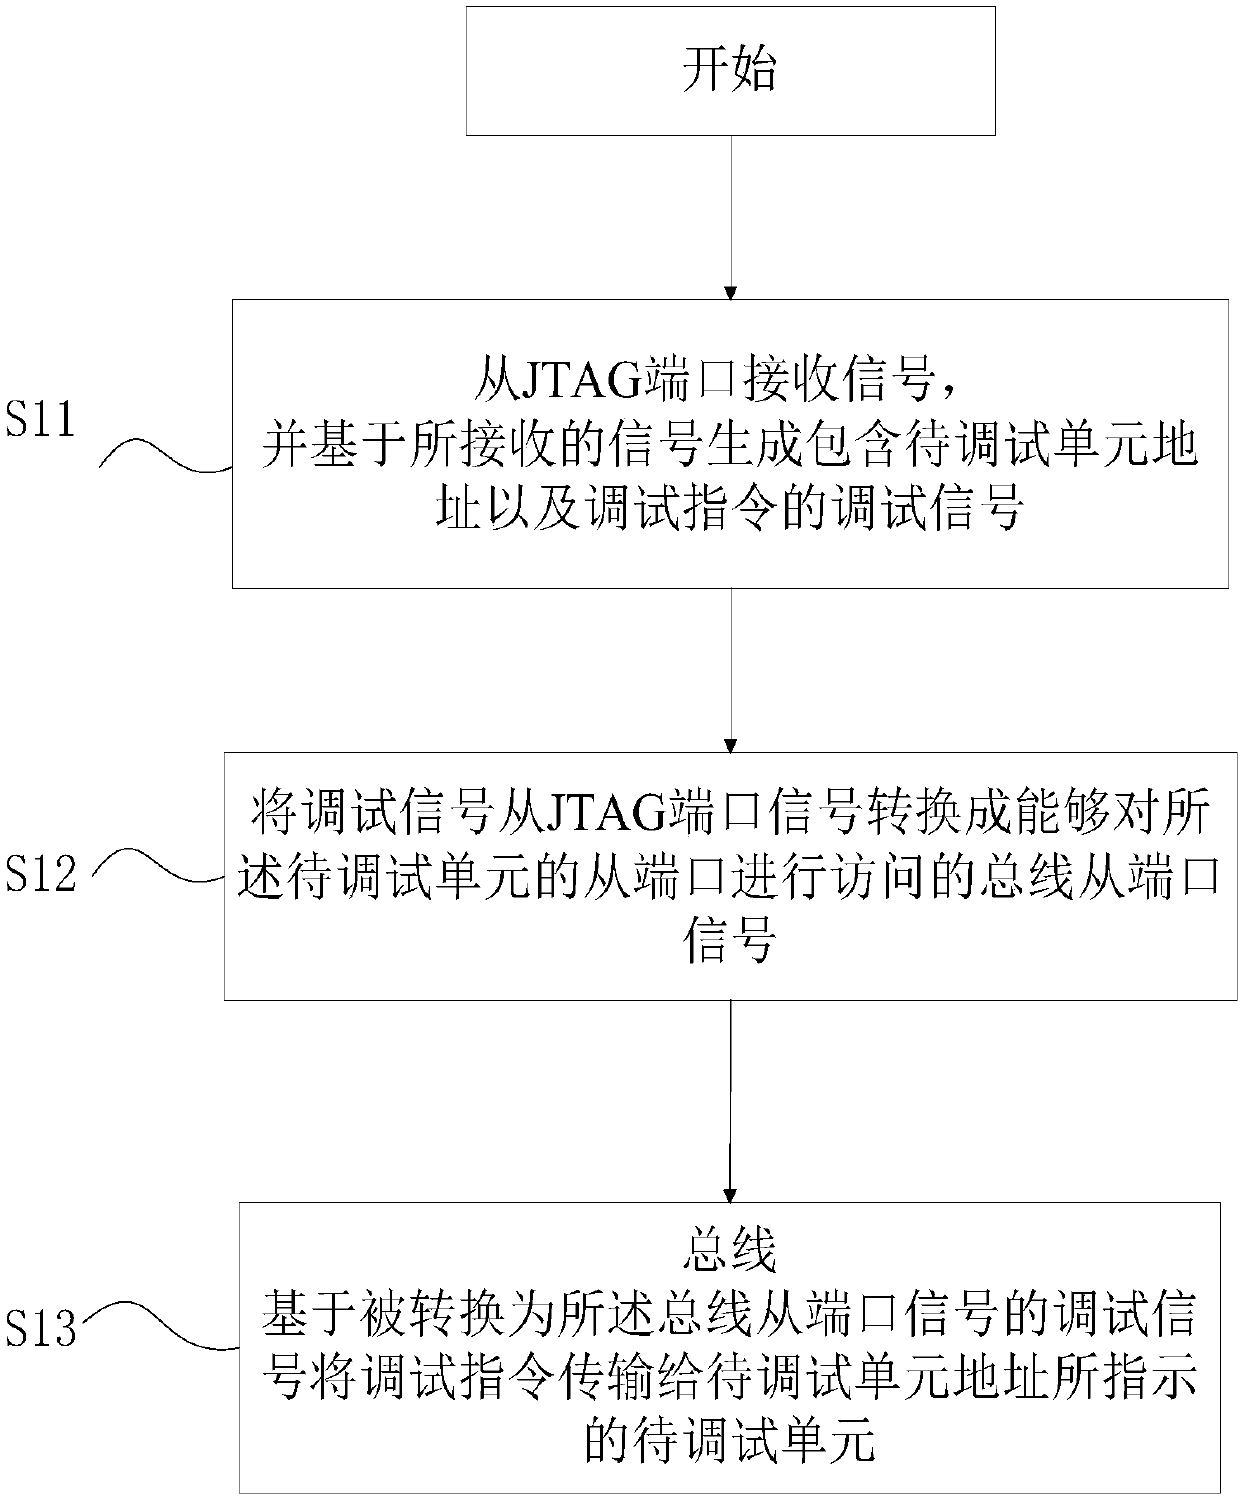 JTAG debugging device and JTAG debugging method